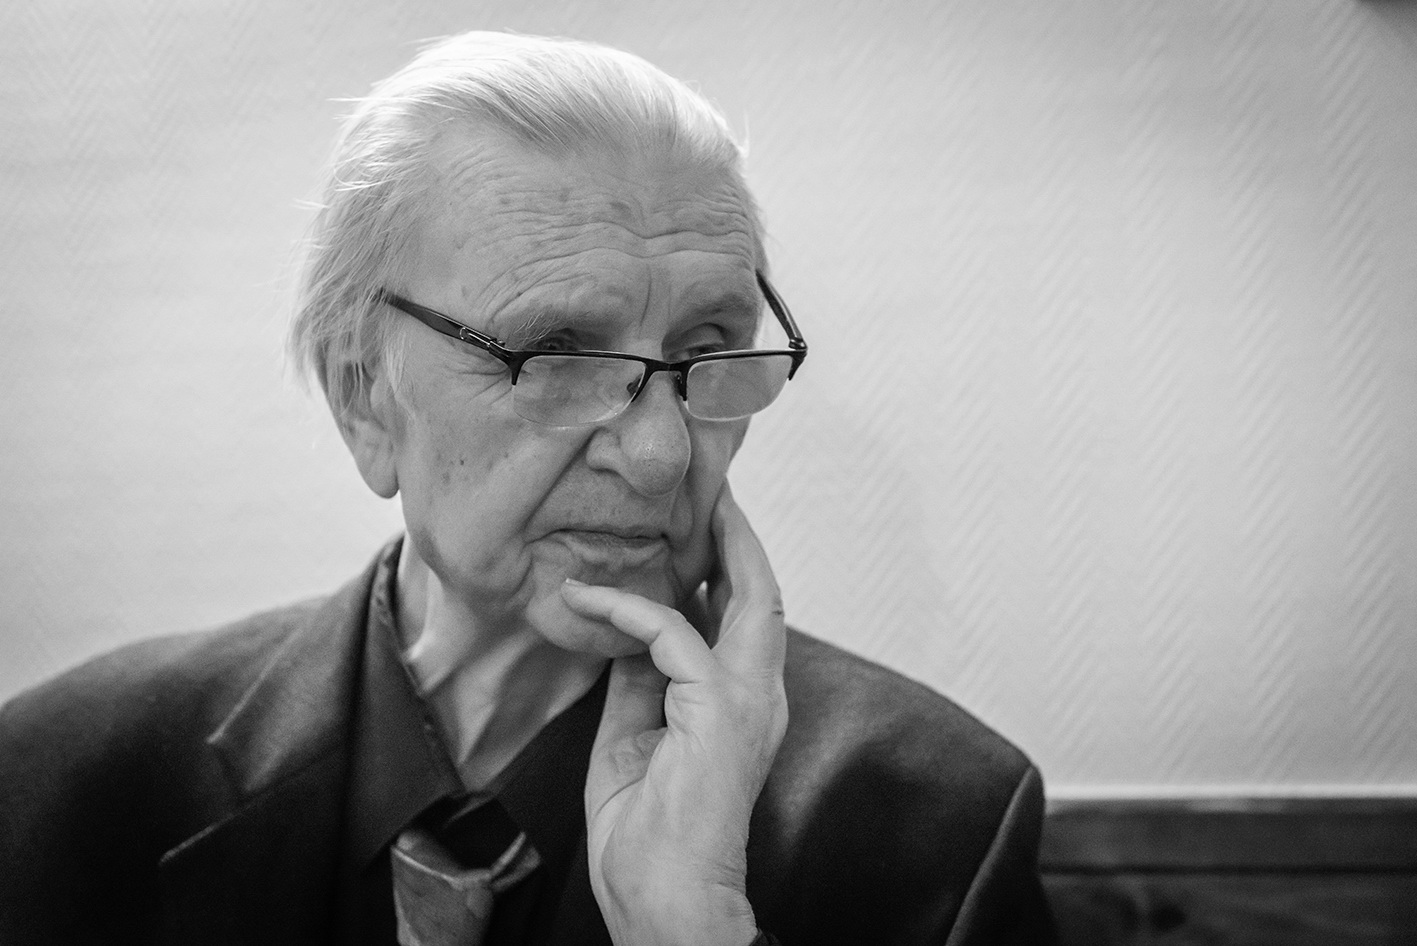 Preminuo Ivan Kordić, bh. pjesnik i novinar